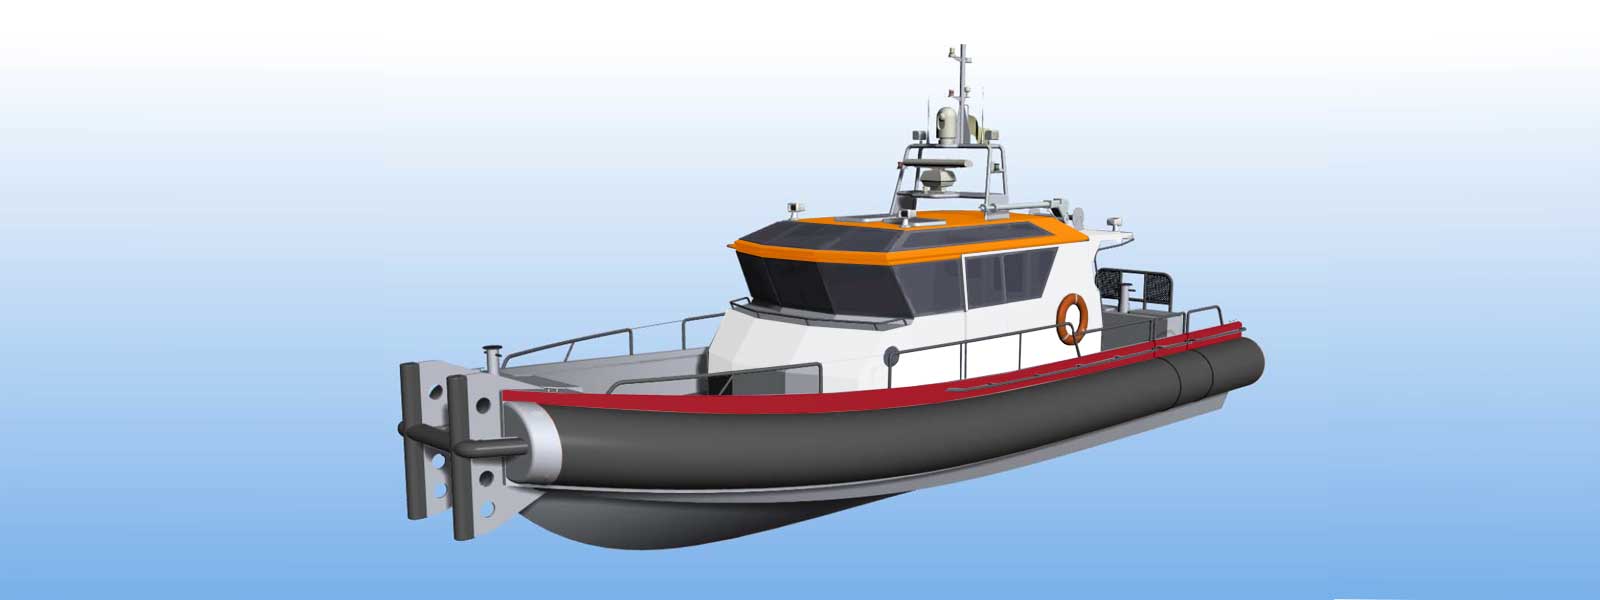 Bridgemans awards contract to build SAR, firefighting and pilot vessel